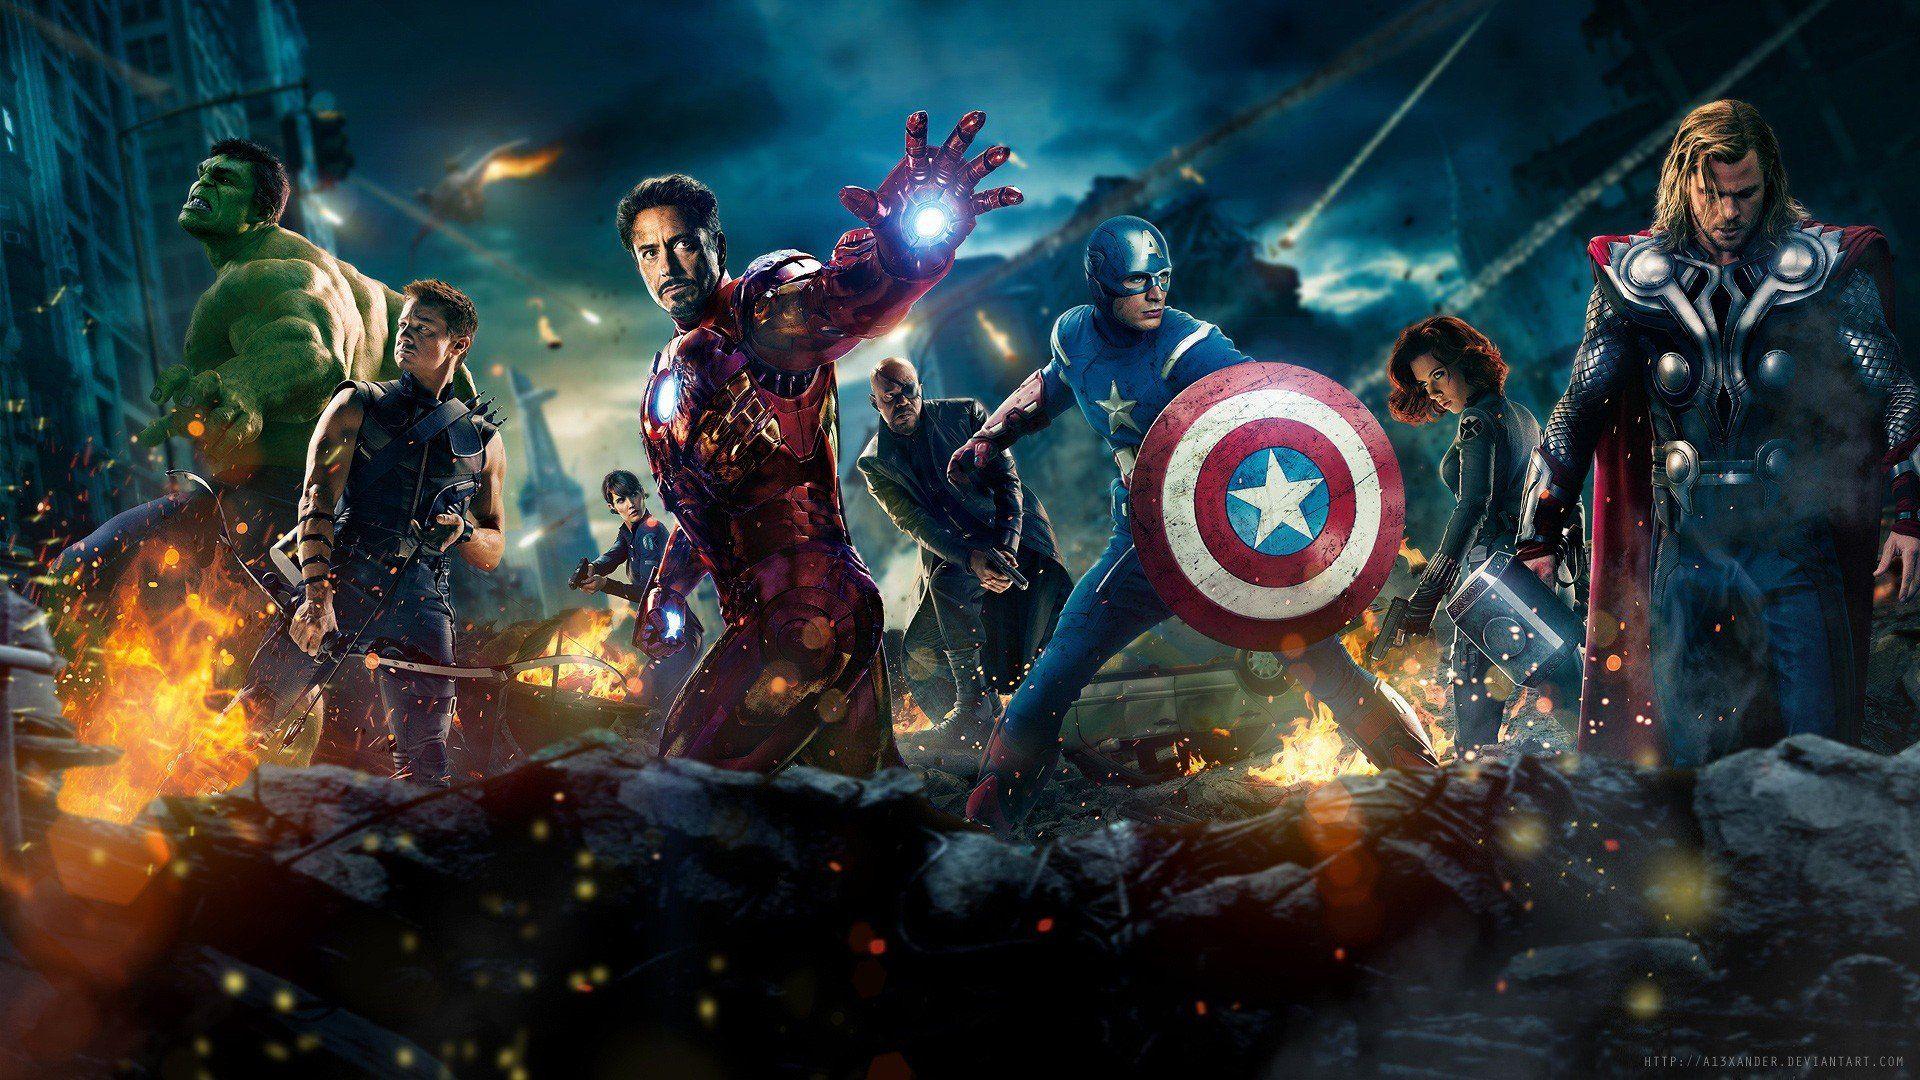 The Avengers Jeremy Renner Hawkeye Clint Barton